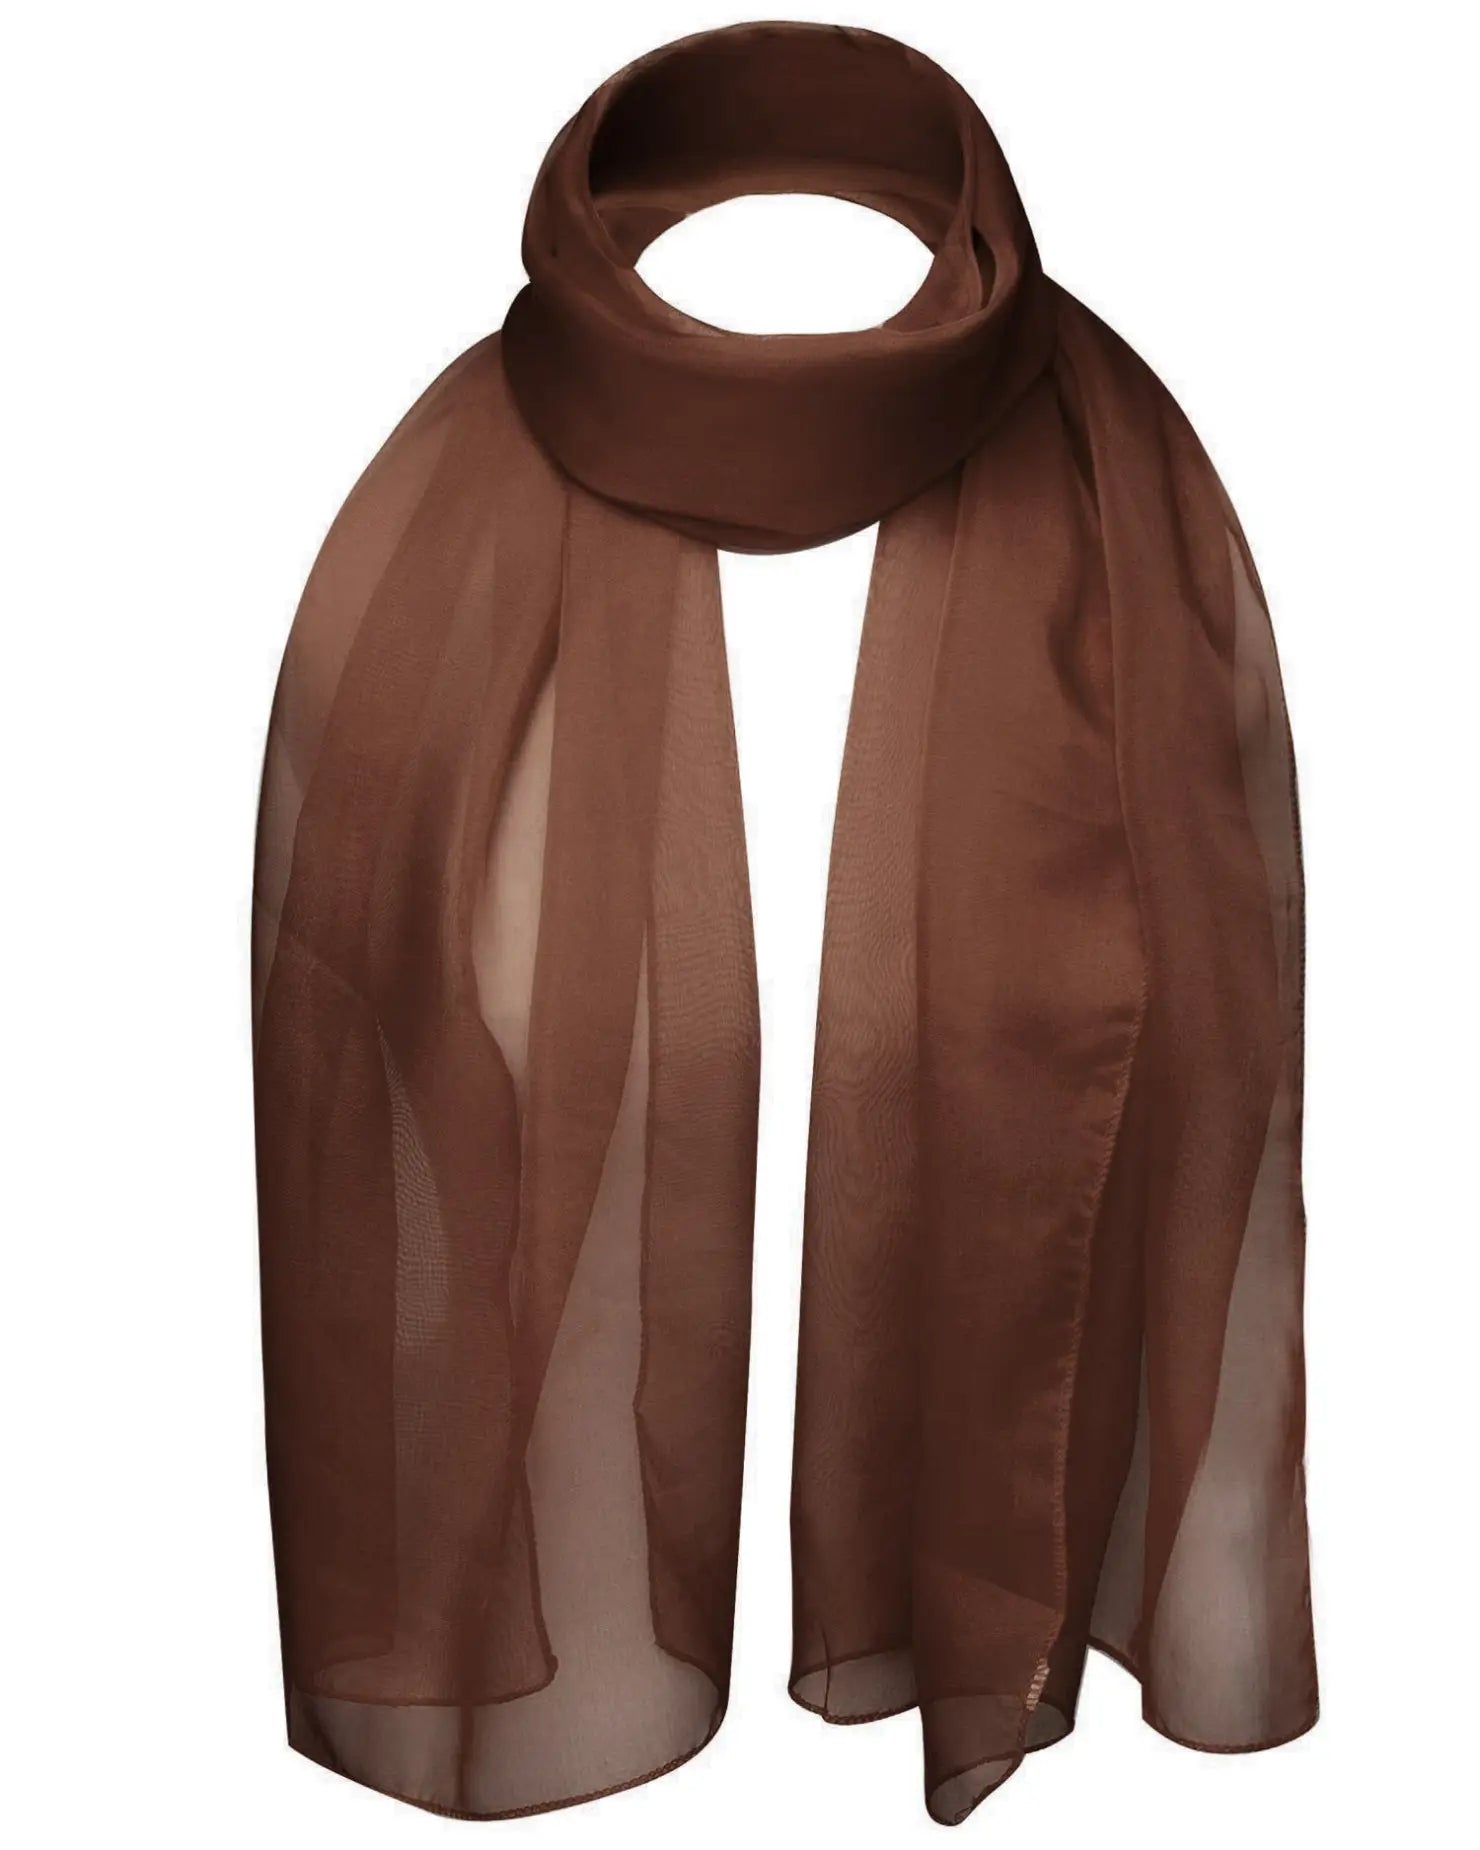 Classic plain chiffon scarf in brown sheers